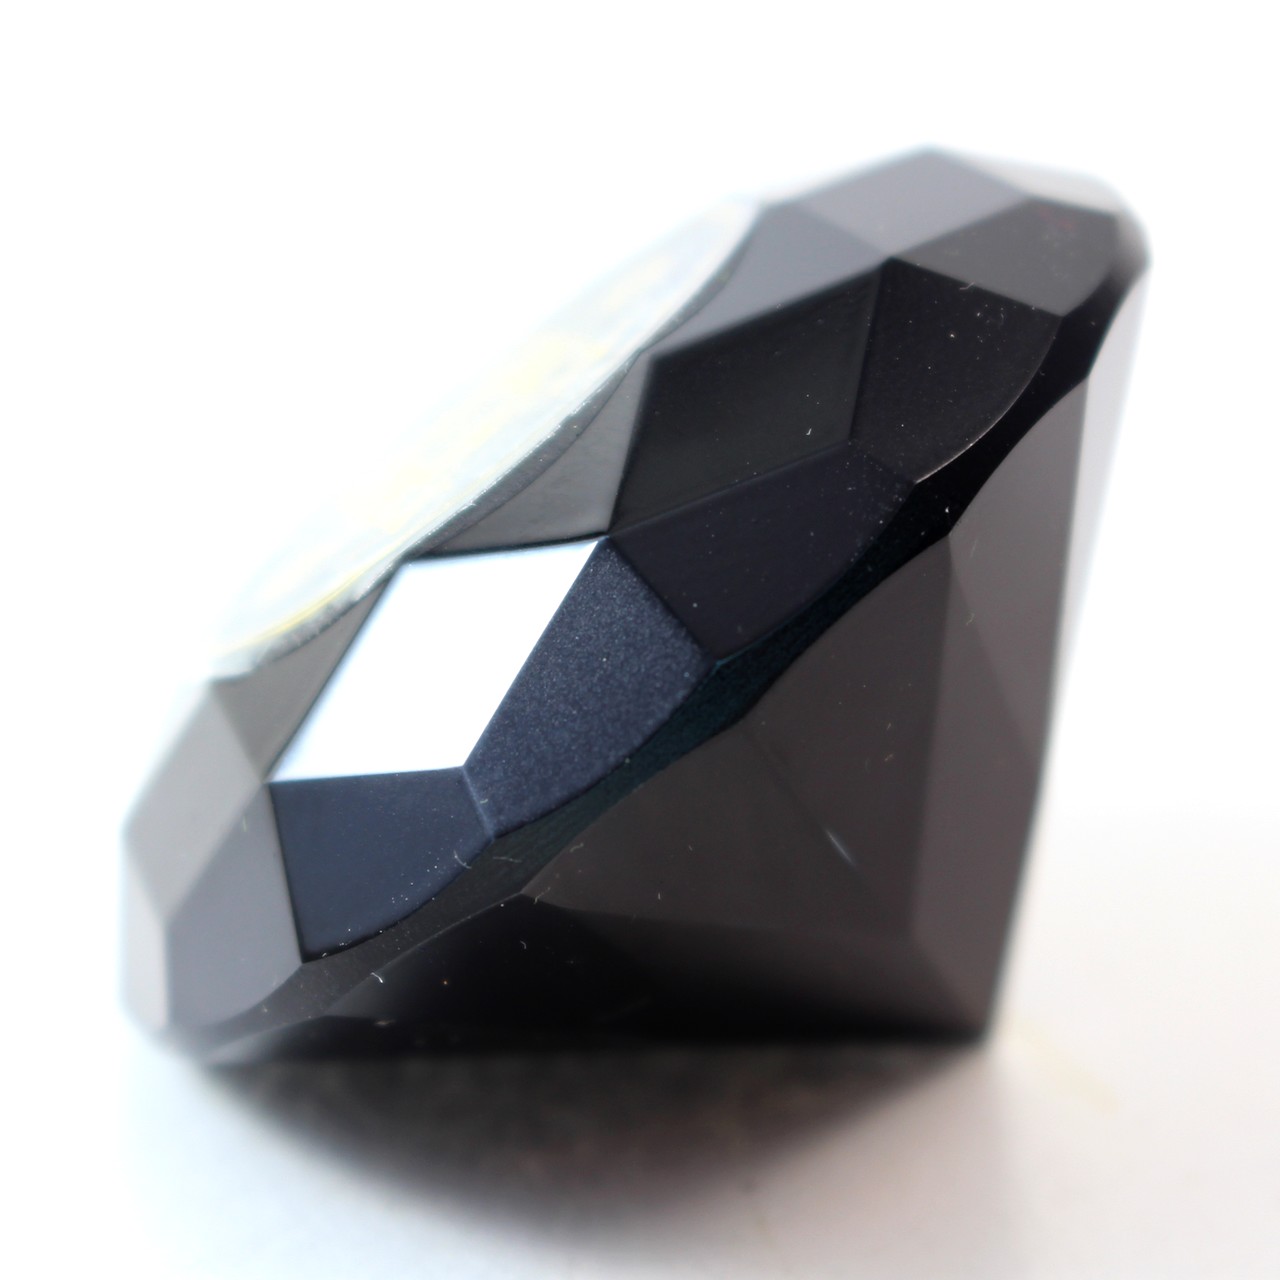 Tachyonen Glas Diamant  Akasha Metatron schwarz 45 Energie Heilige Geometrie